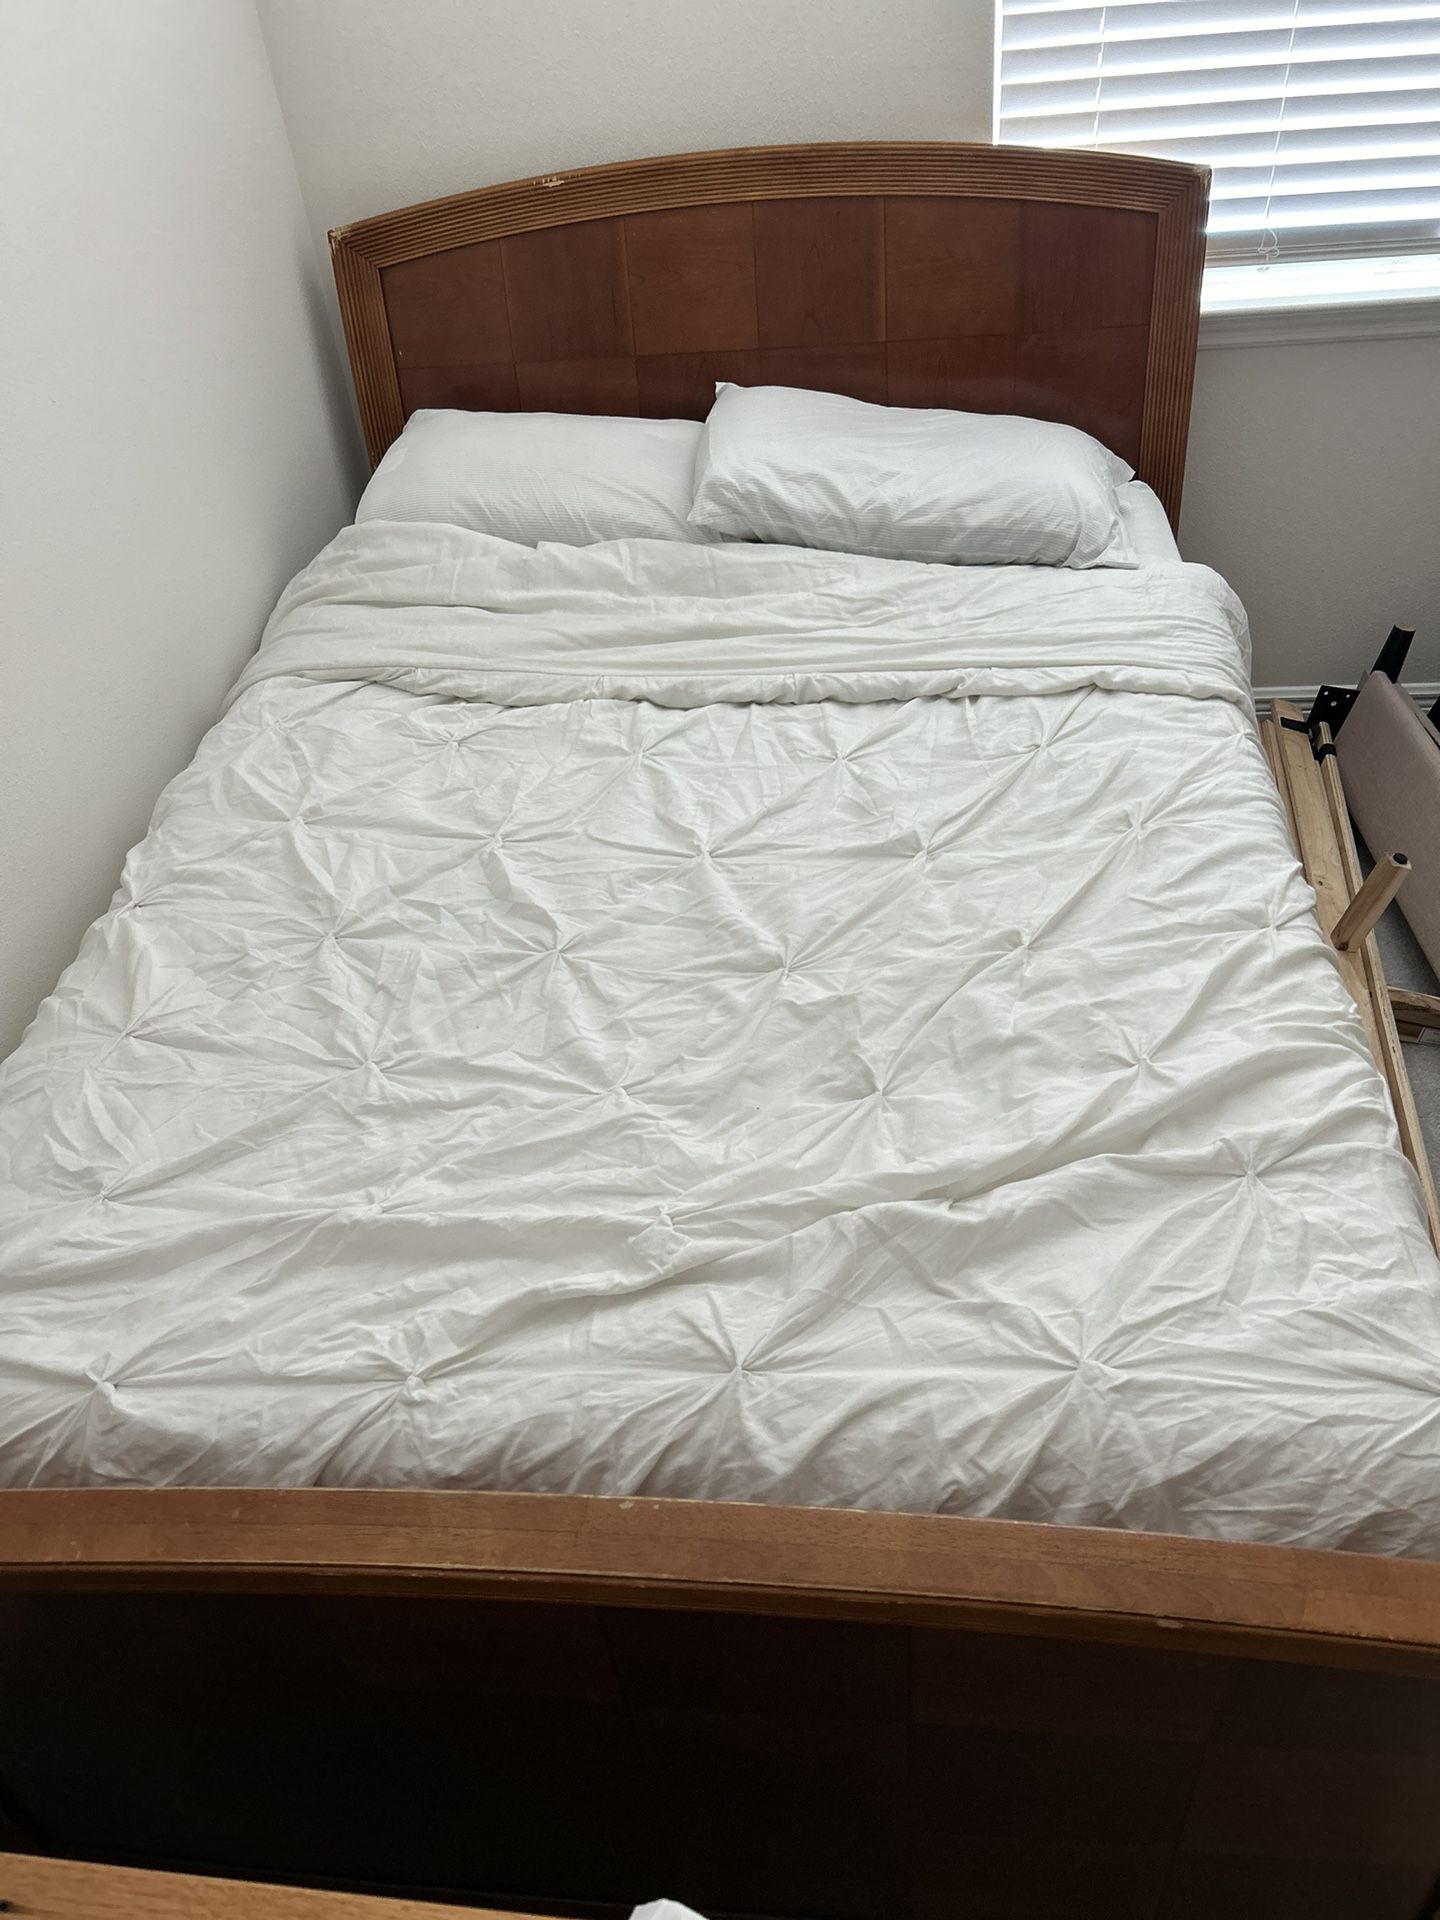 Full Bed And Dresser Set